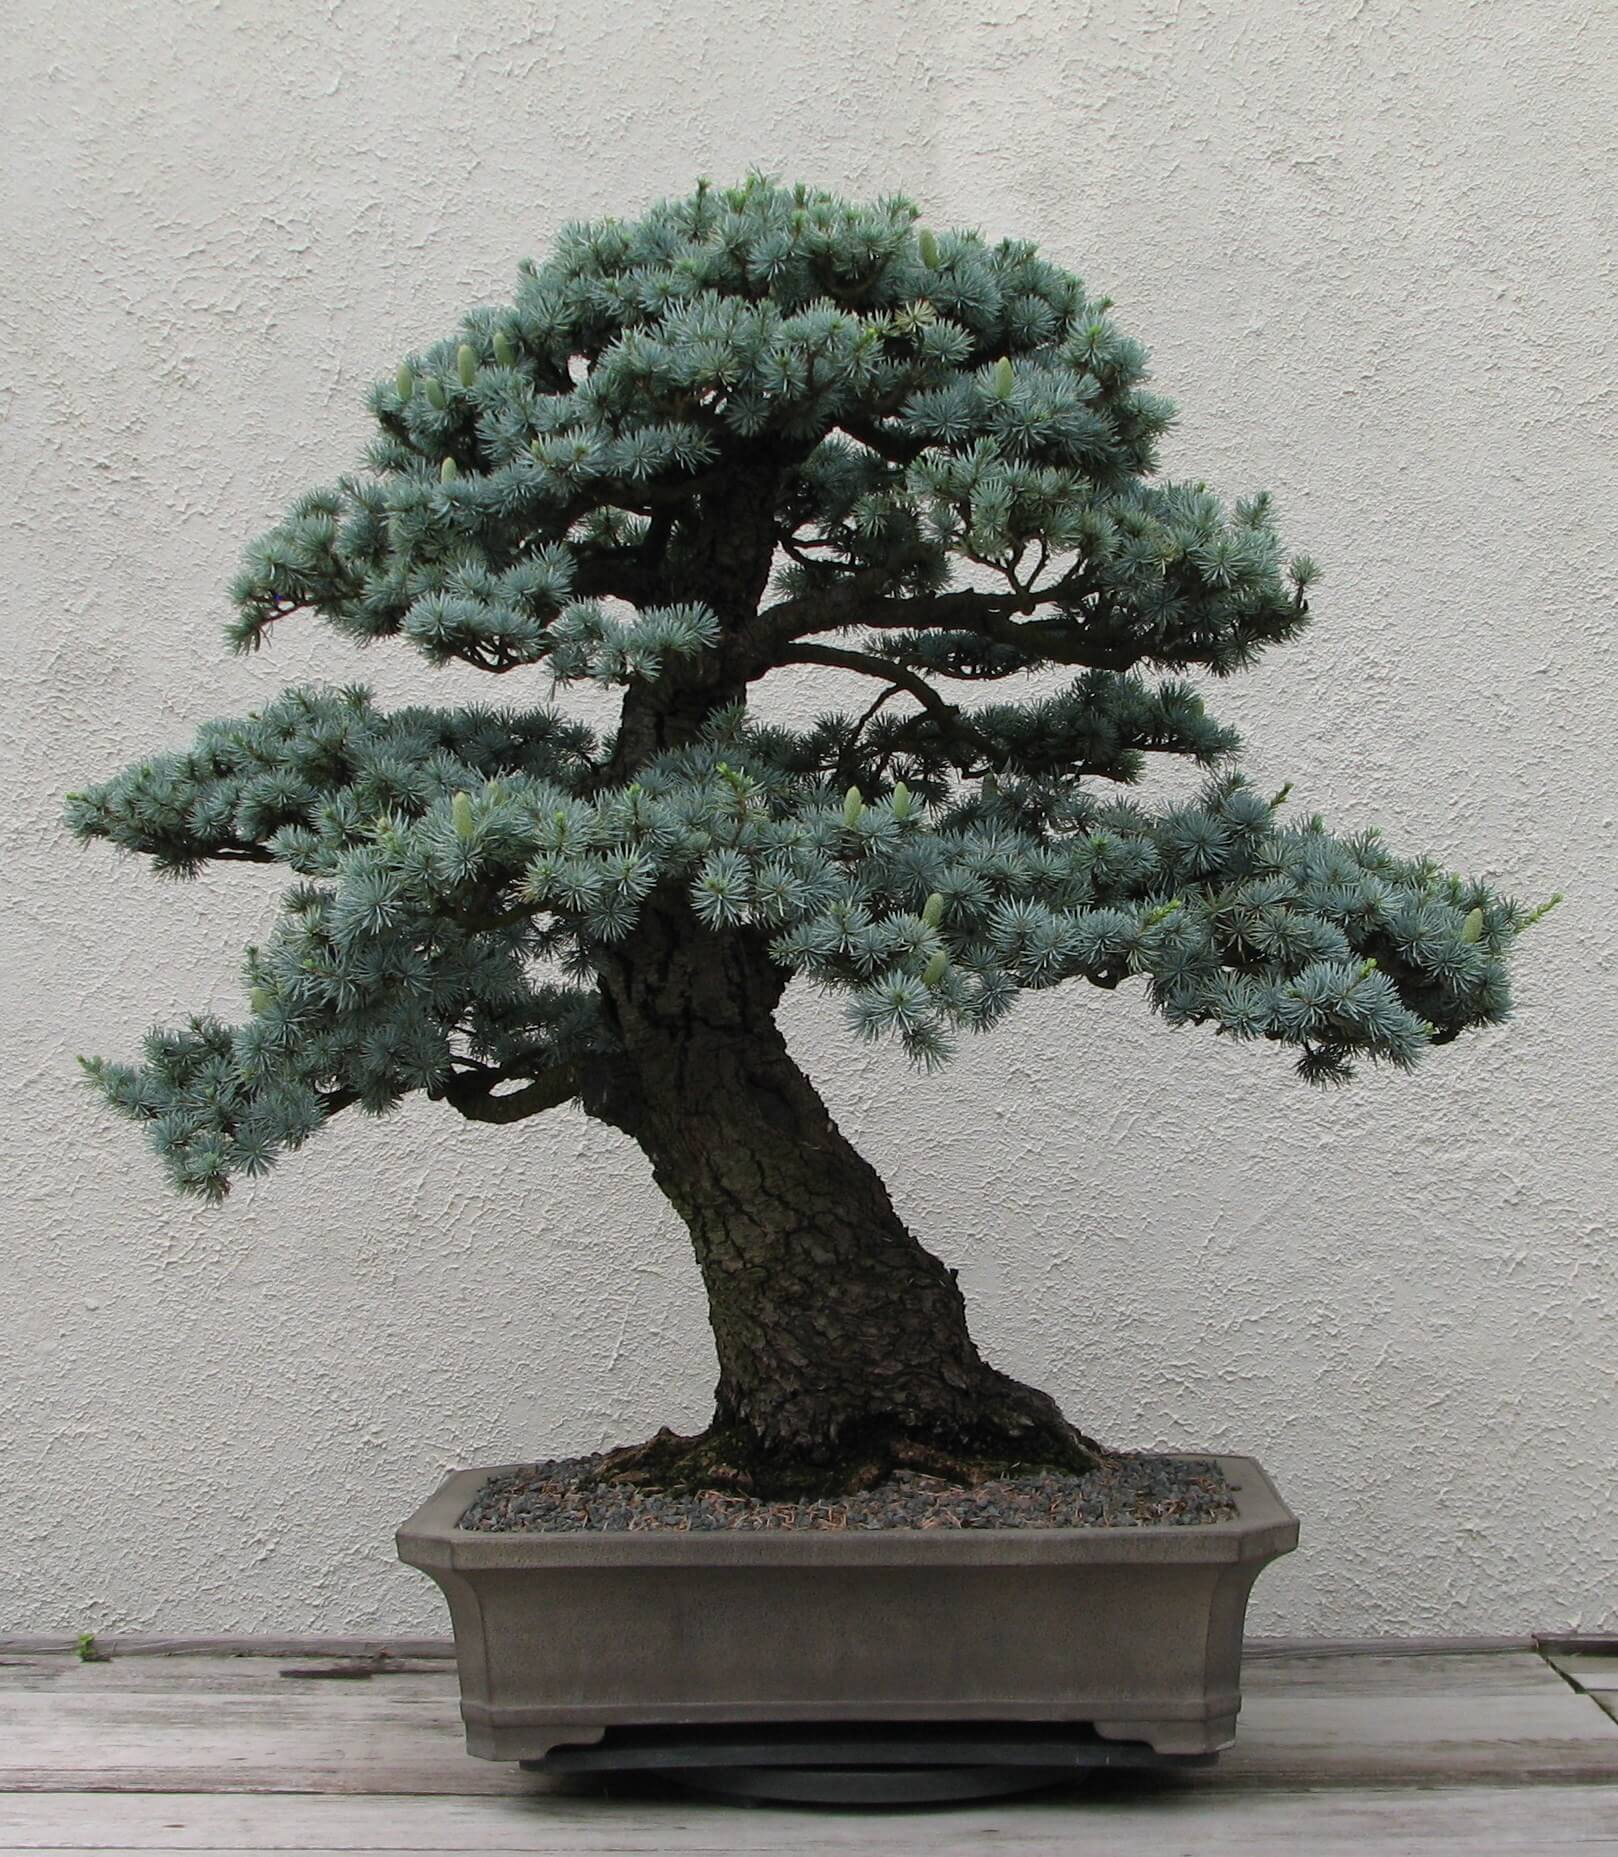 Japanese White Pine Bonsai tree in a rectangular grey stone pot.